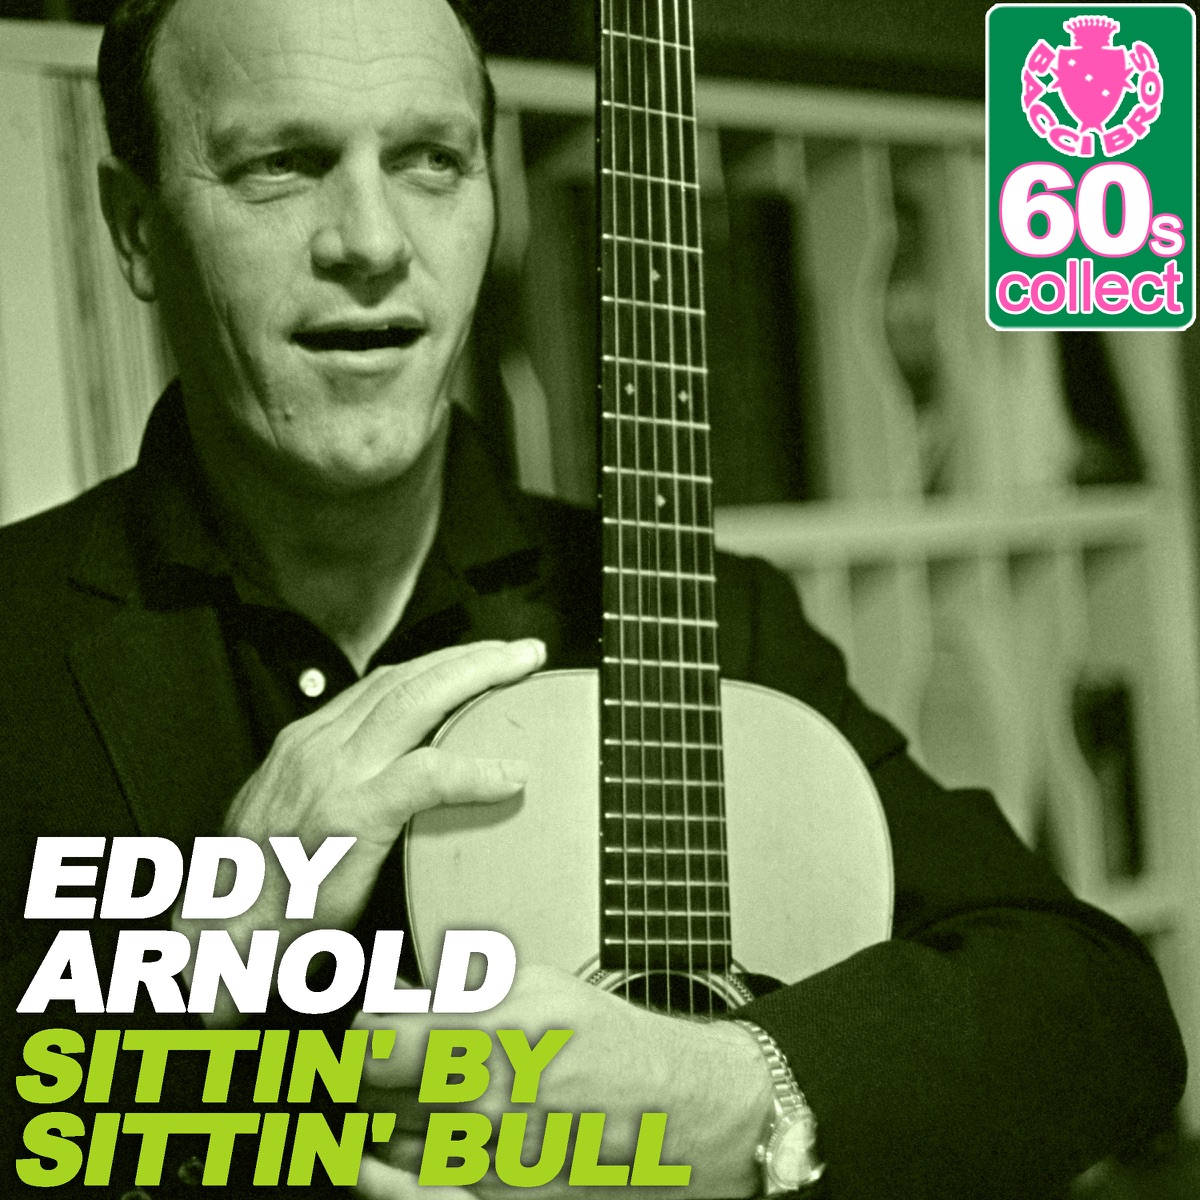 Eddy Arnold Sittin By Sittin Bull Vinyl Cover Wallpaper